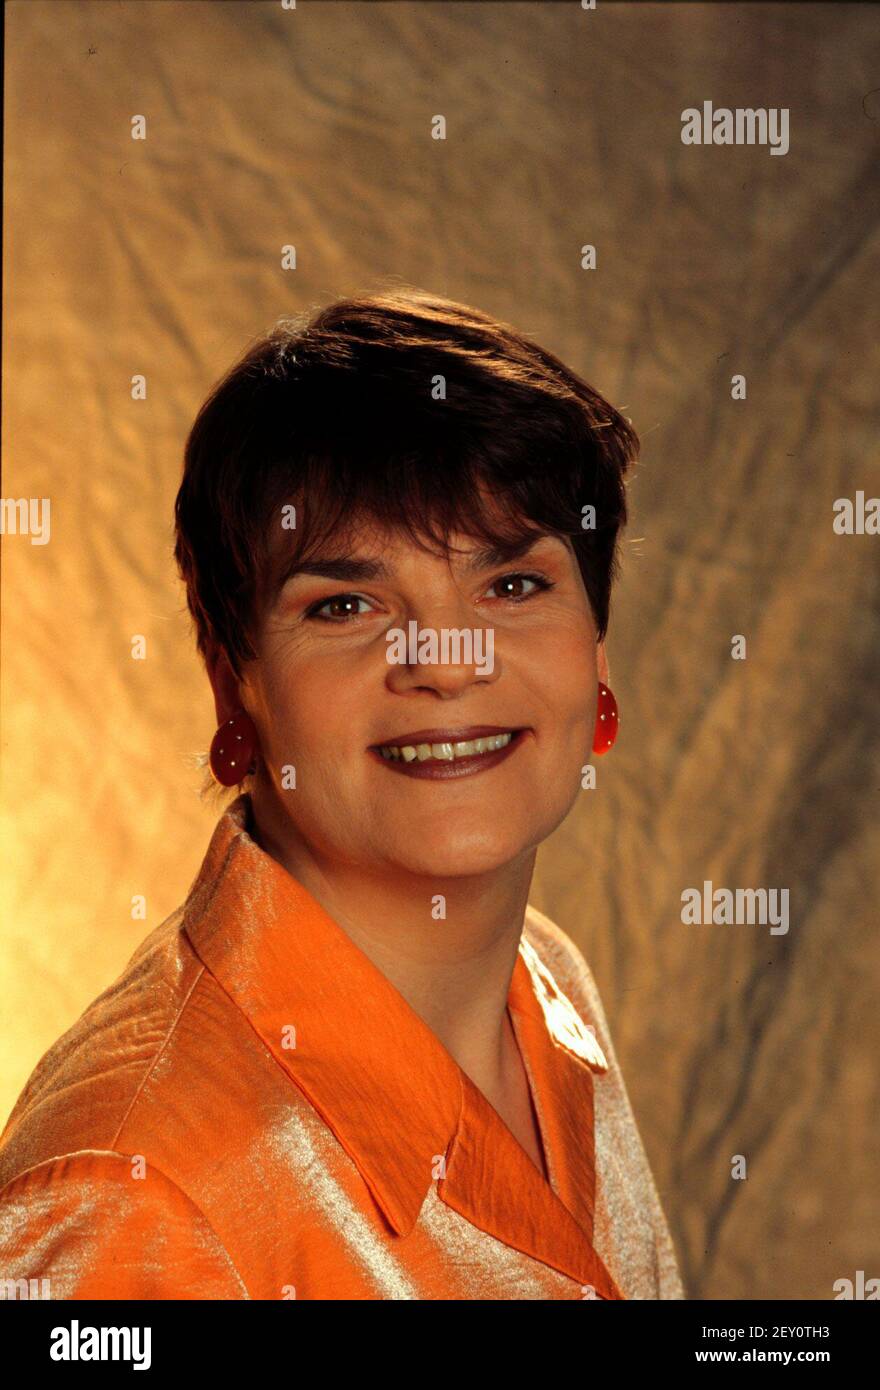 Gayle Tufts, amerikanische Entertainerin, Portrait circa 1998. Gayle Tufts, American entertainer, portrait circa 1998. Stock Photo